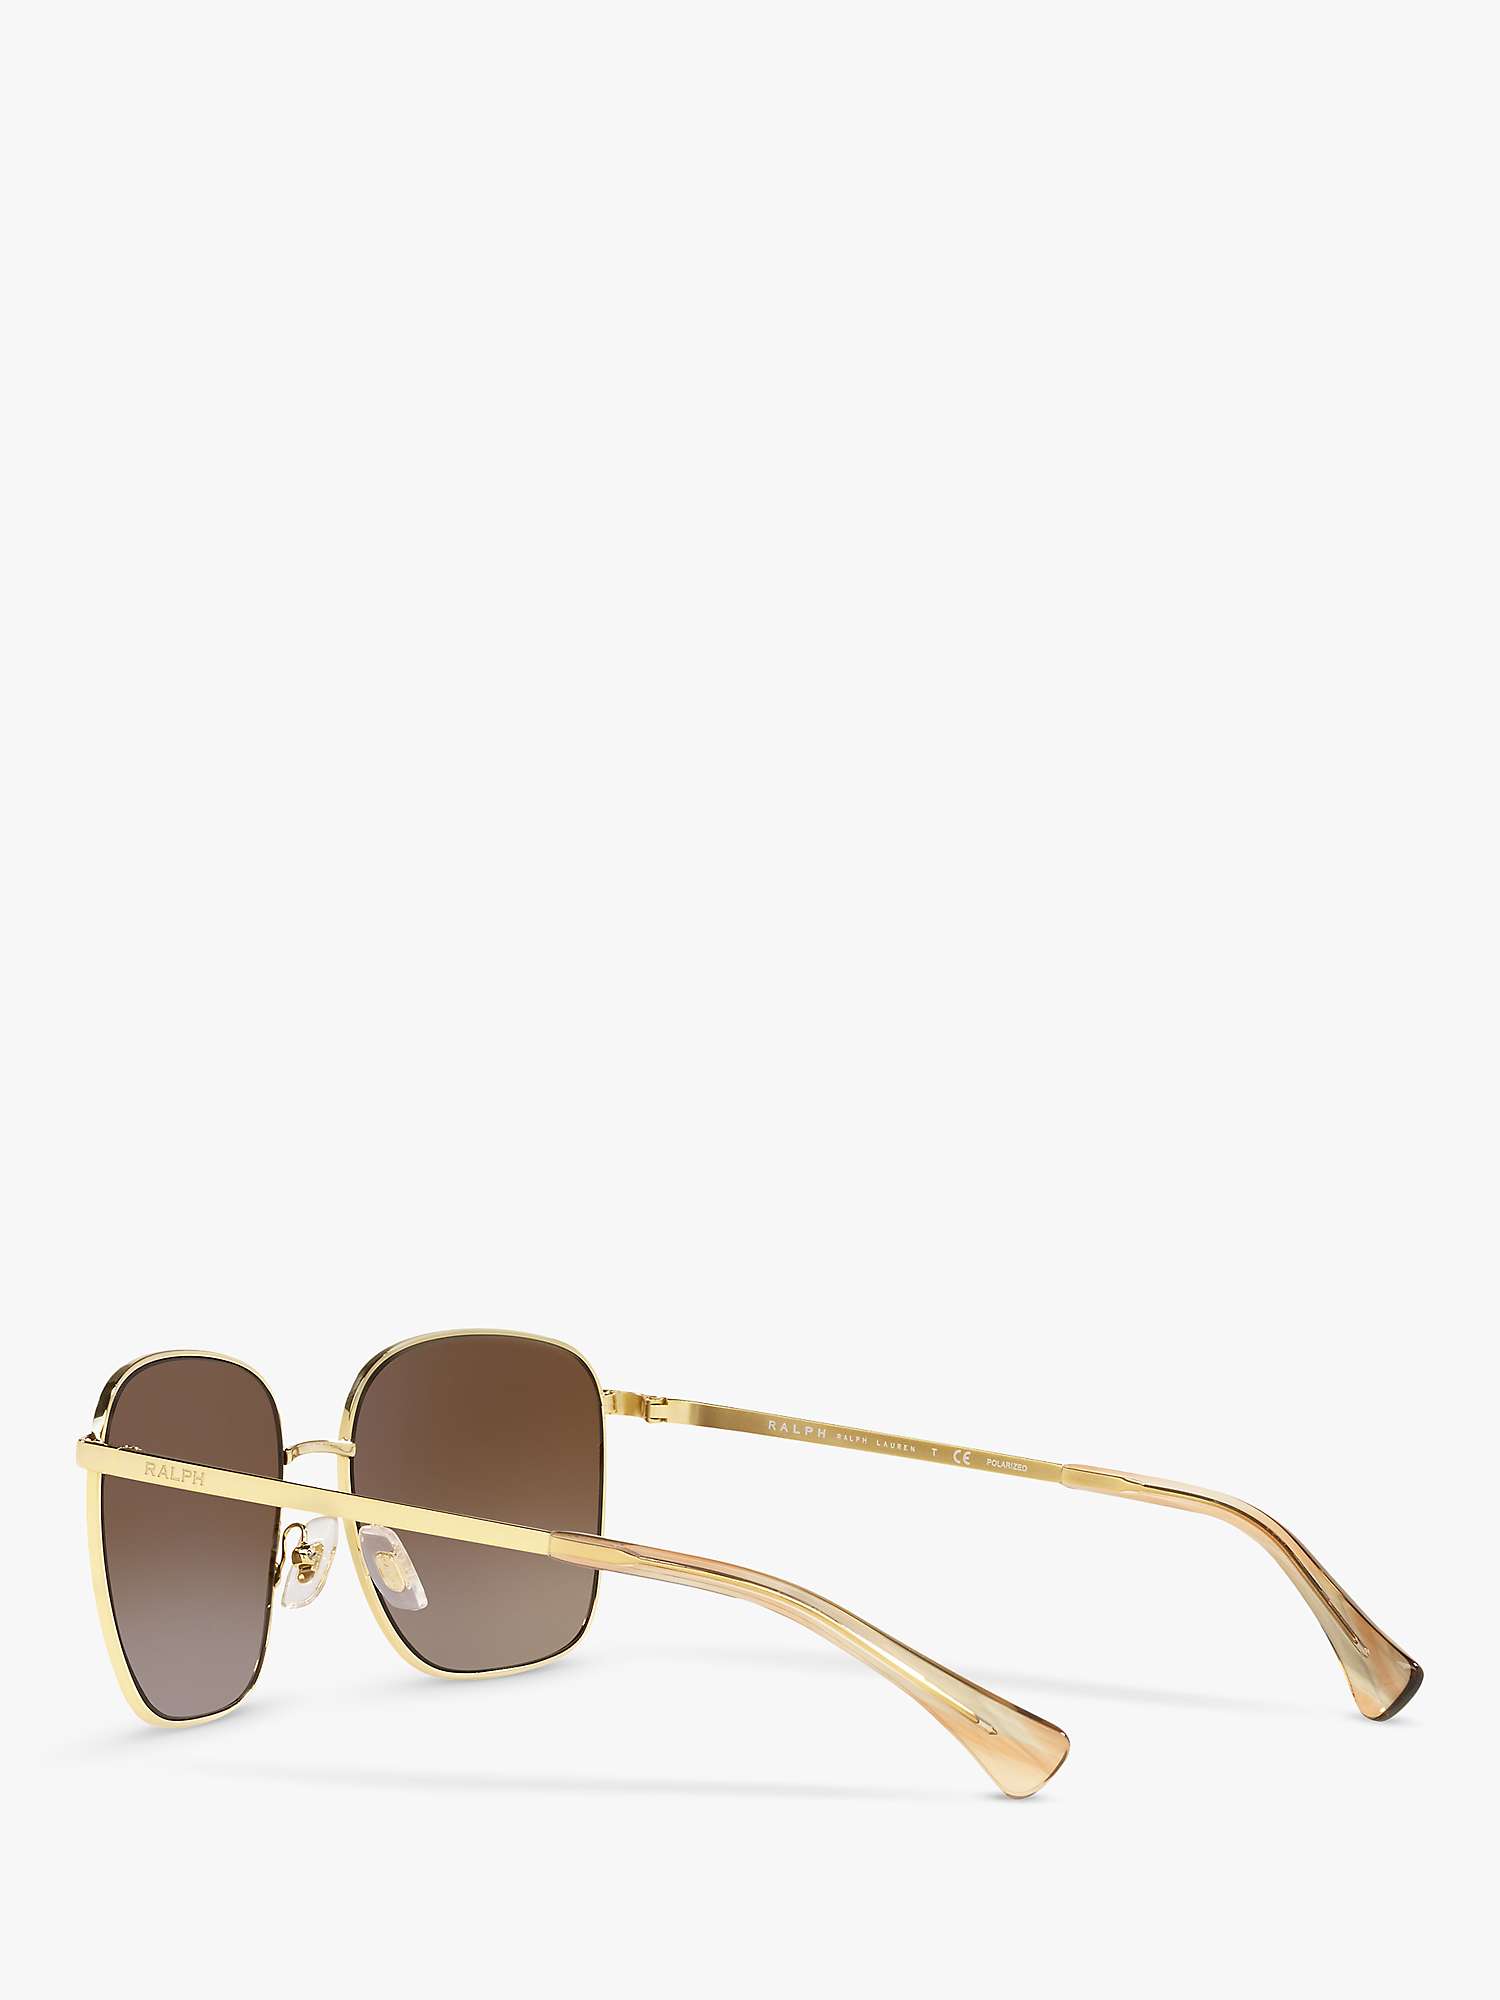 Buy Ralph RA4136 Women's Square Shape Polarised Sunglasses, Gold/Brown Online at johnlewis.com